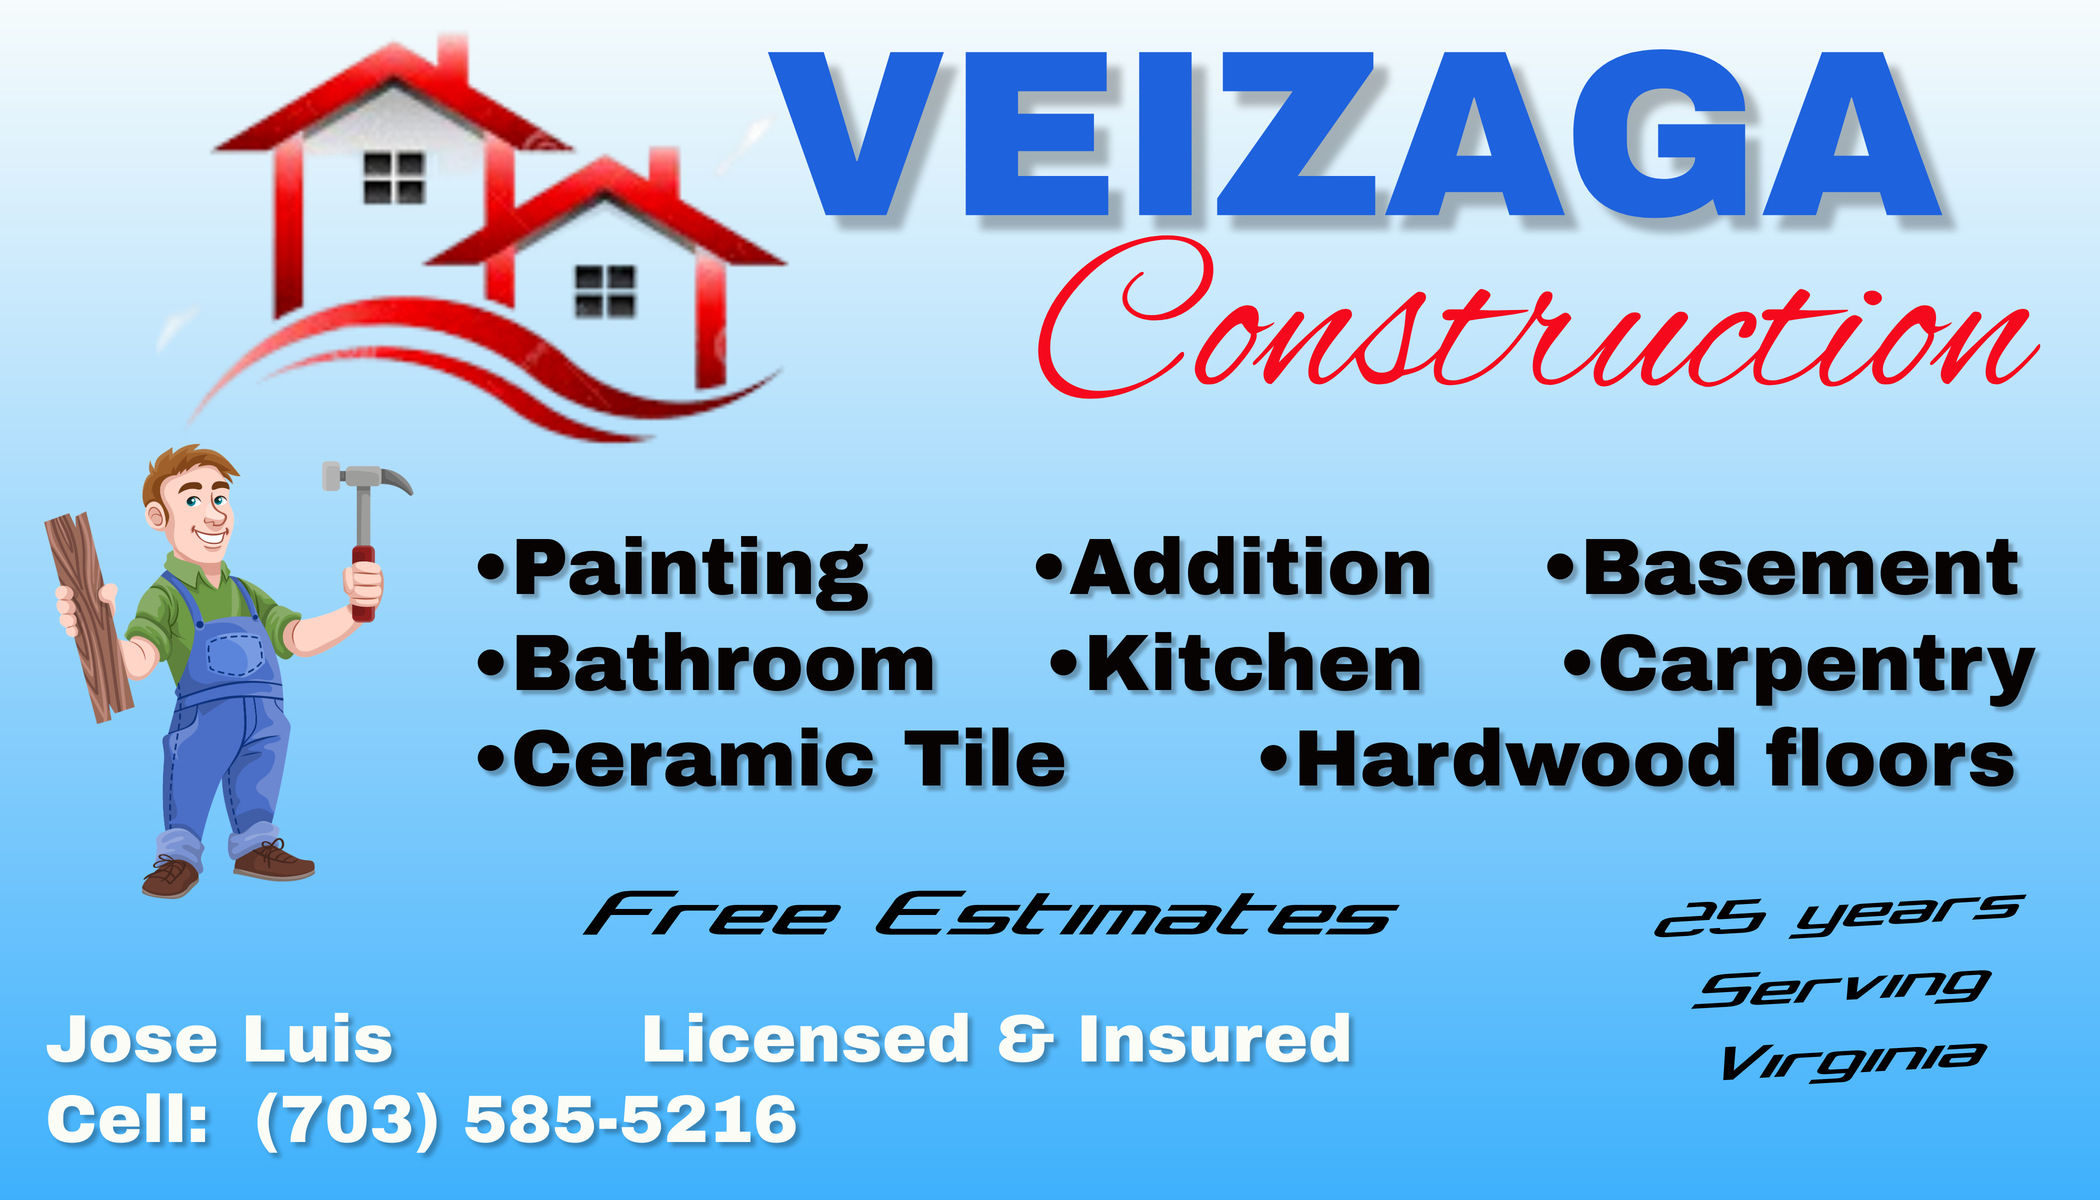 Veizaga Construction biz card